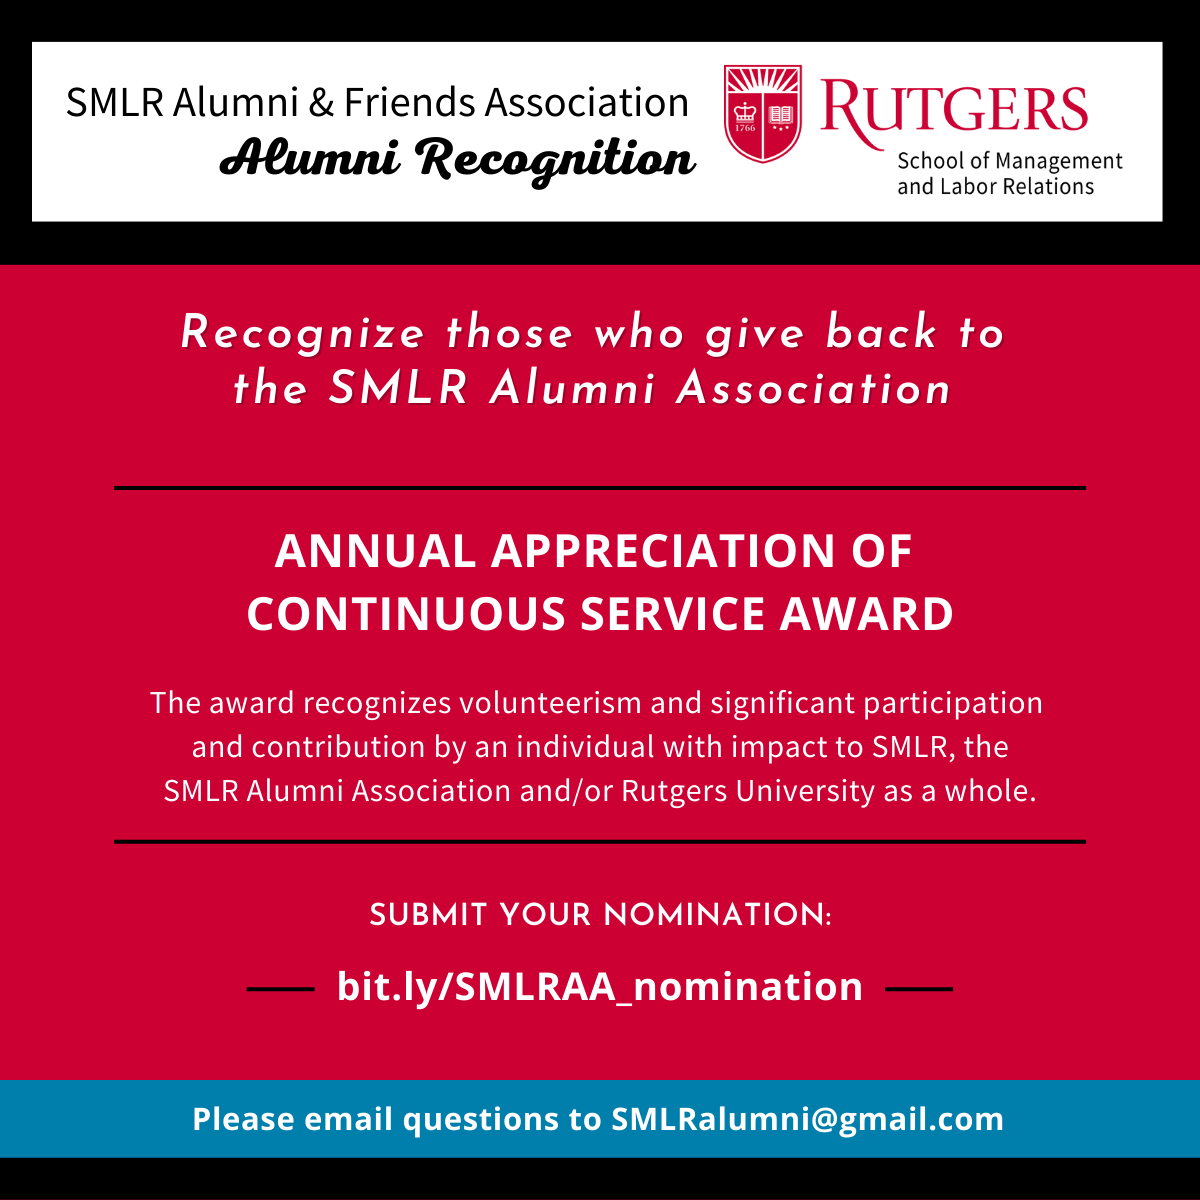 Image of Alumni Recognition Award